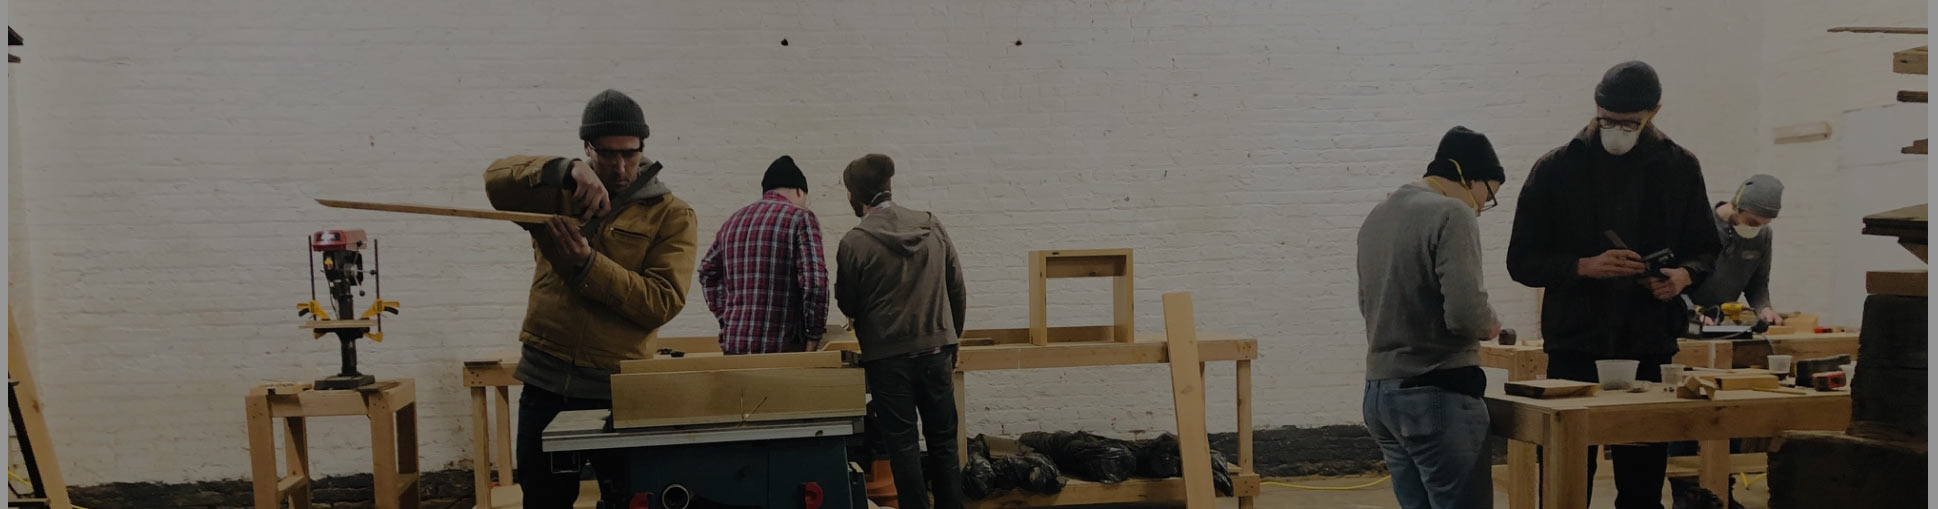 Beginner Woodworking Class in Brooklyn, New York